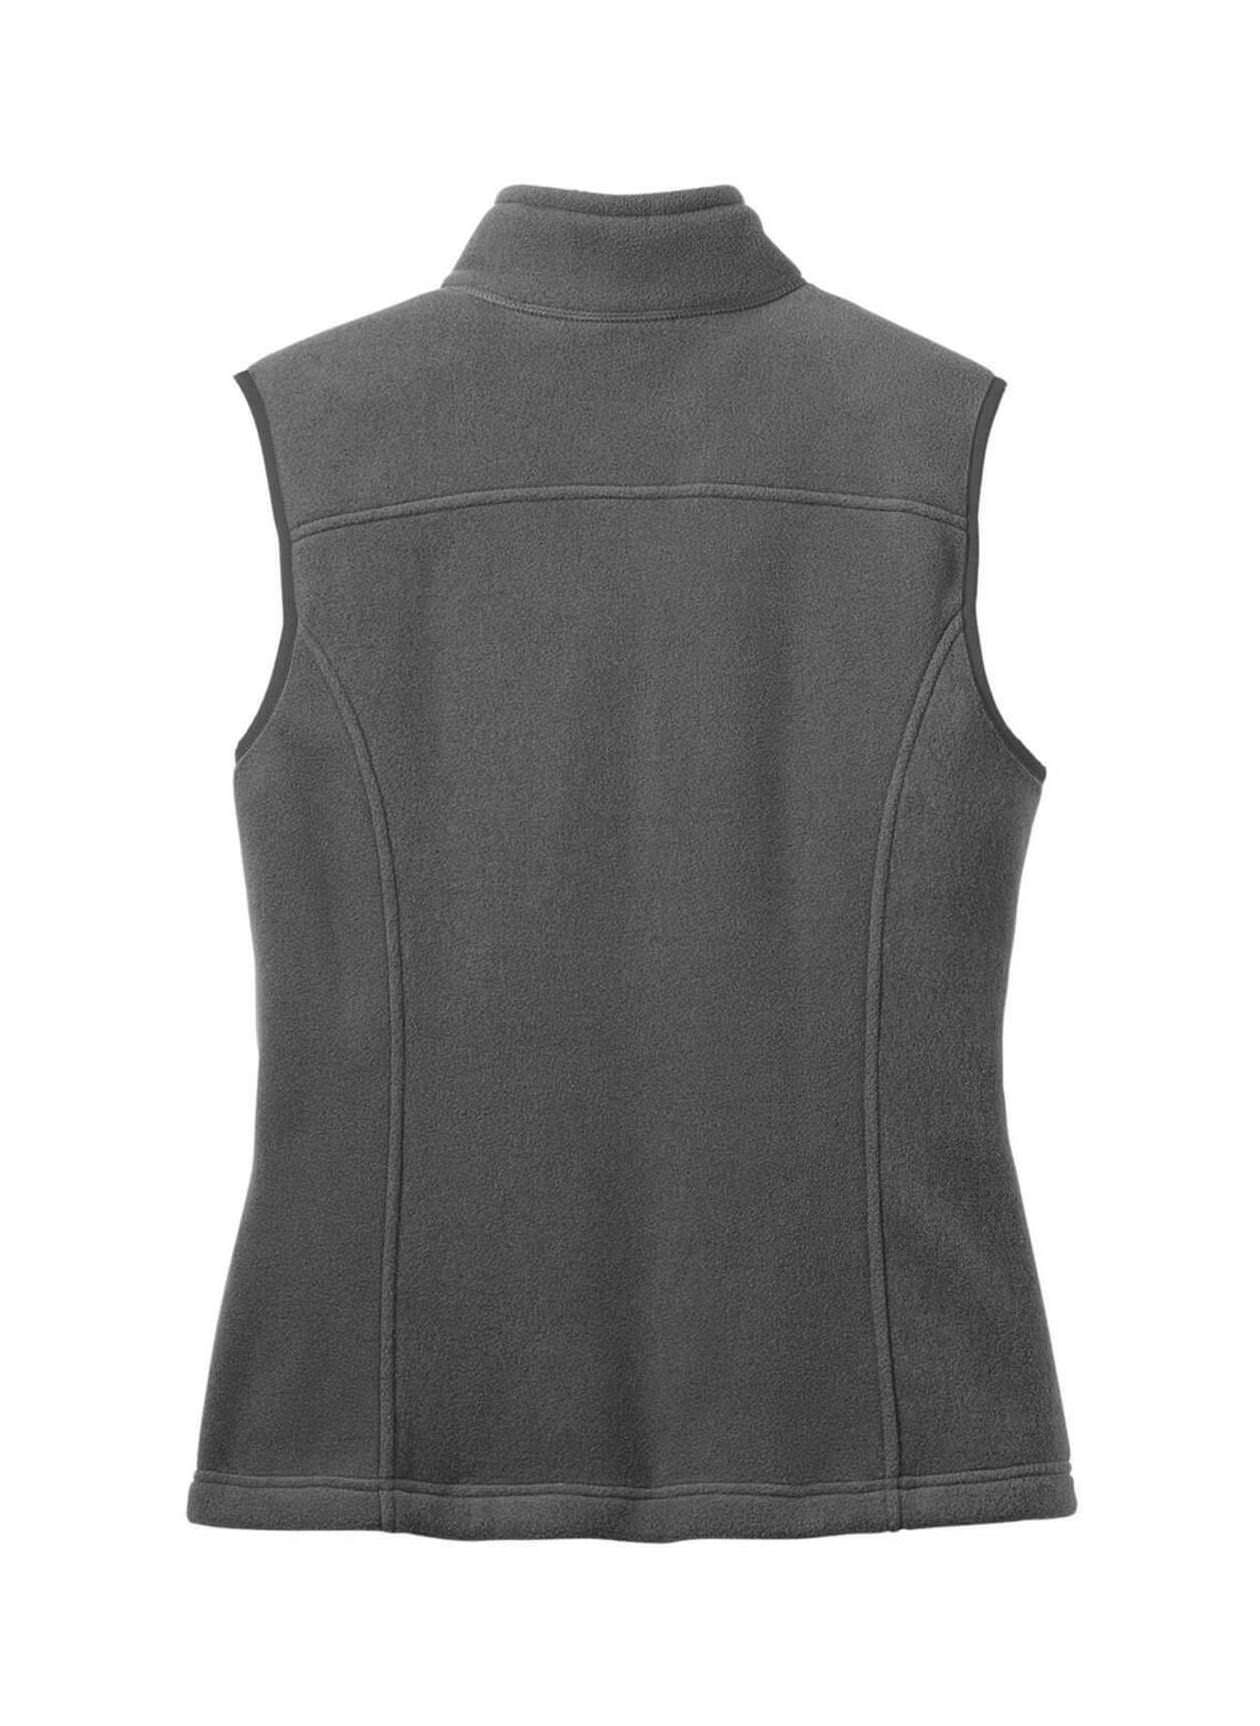 Women's Eddie Bauer Grey Steel Fleece Vest EB205